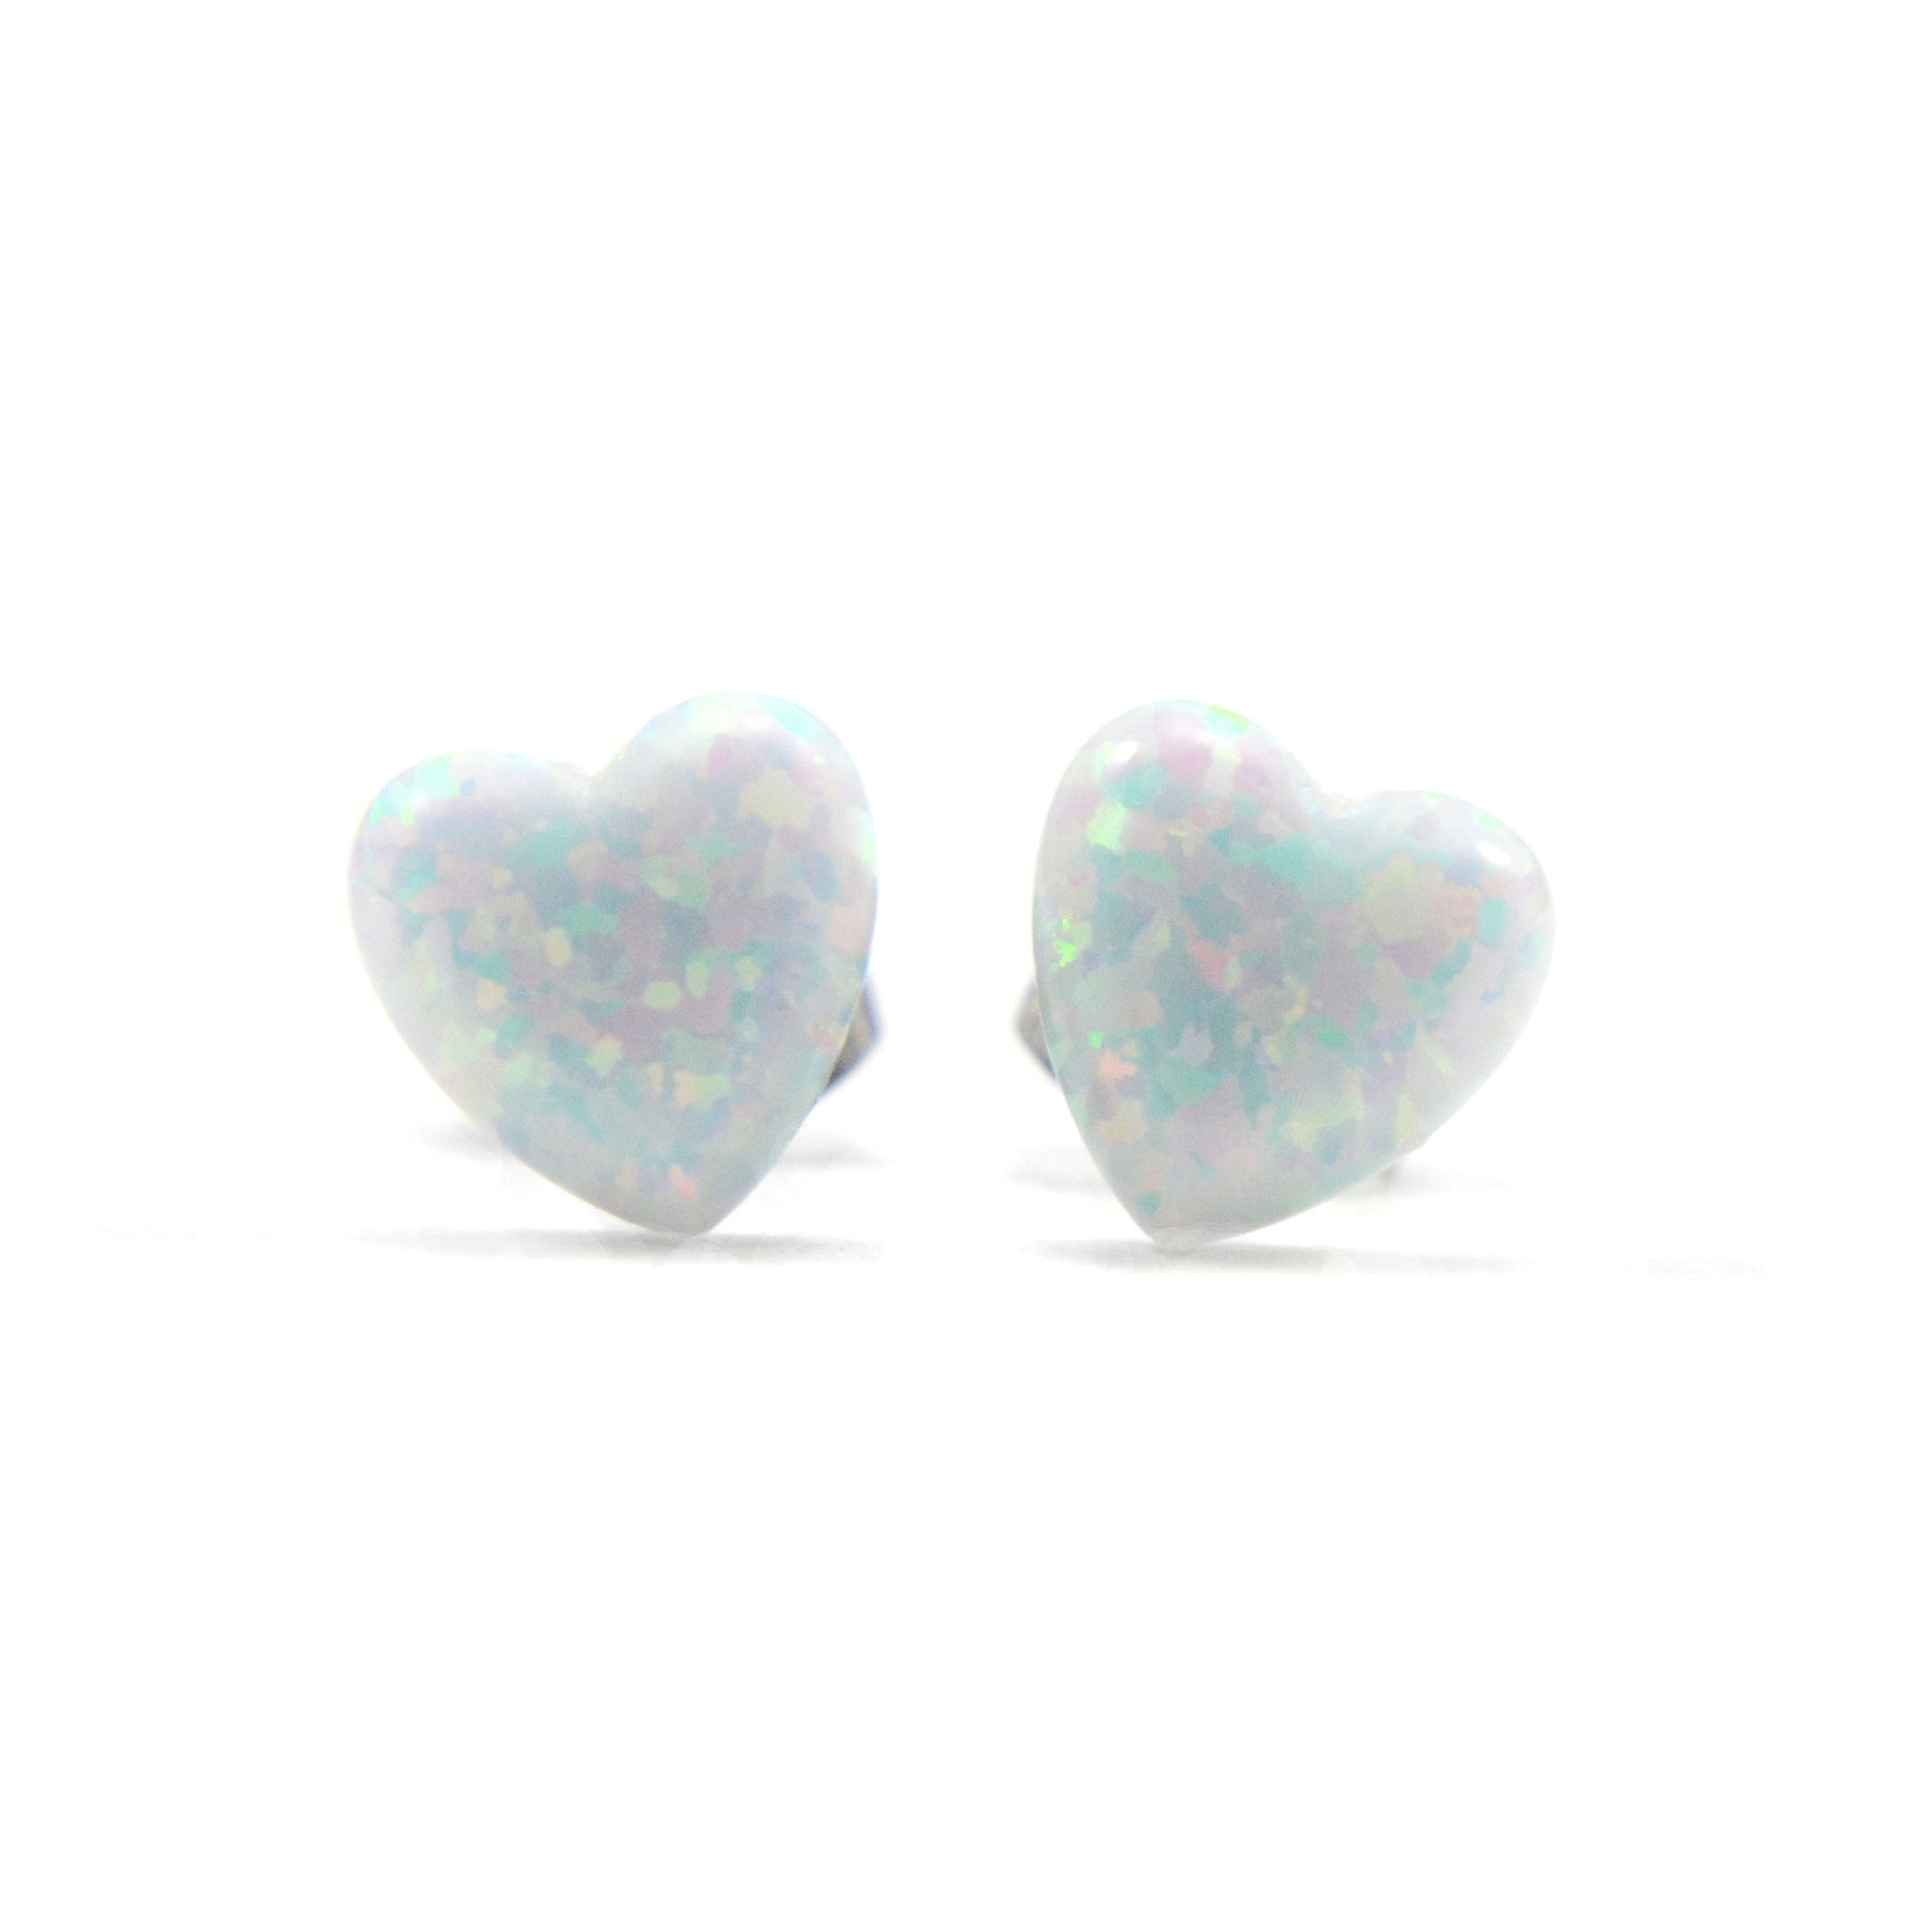 White Opal heart earrings on white background